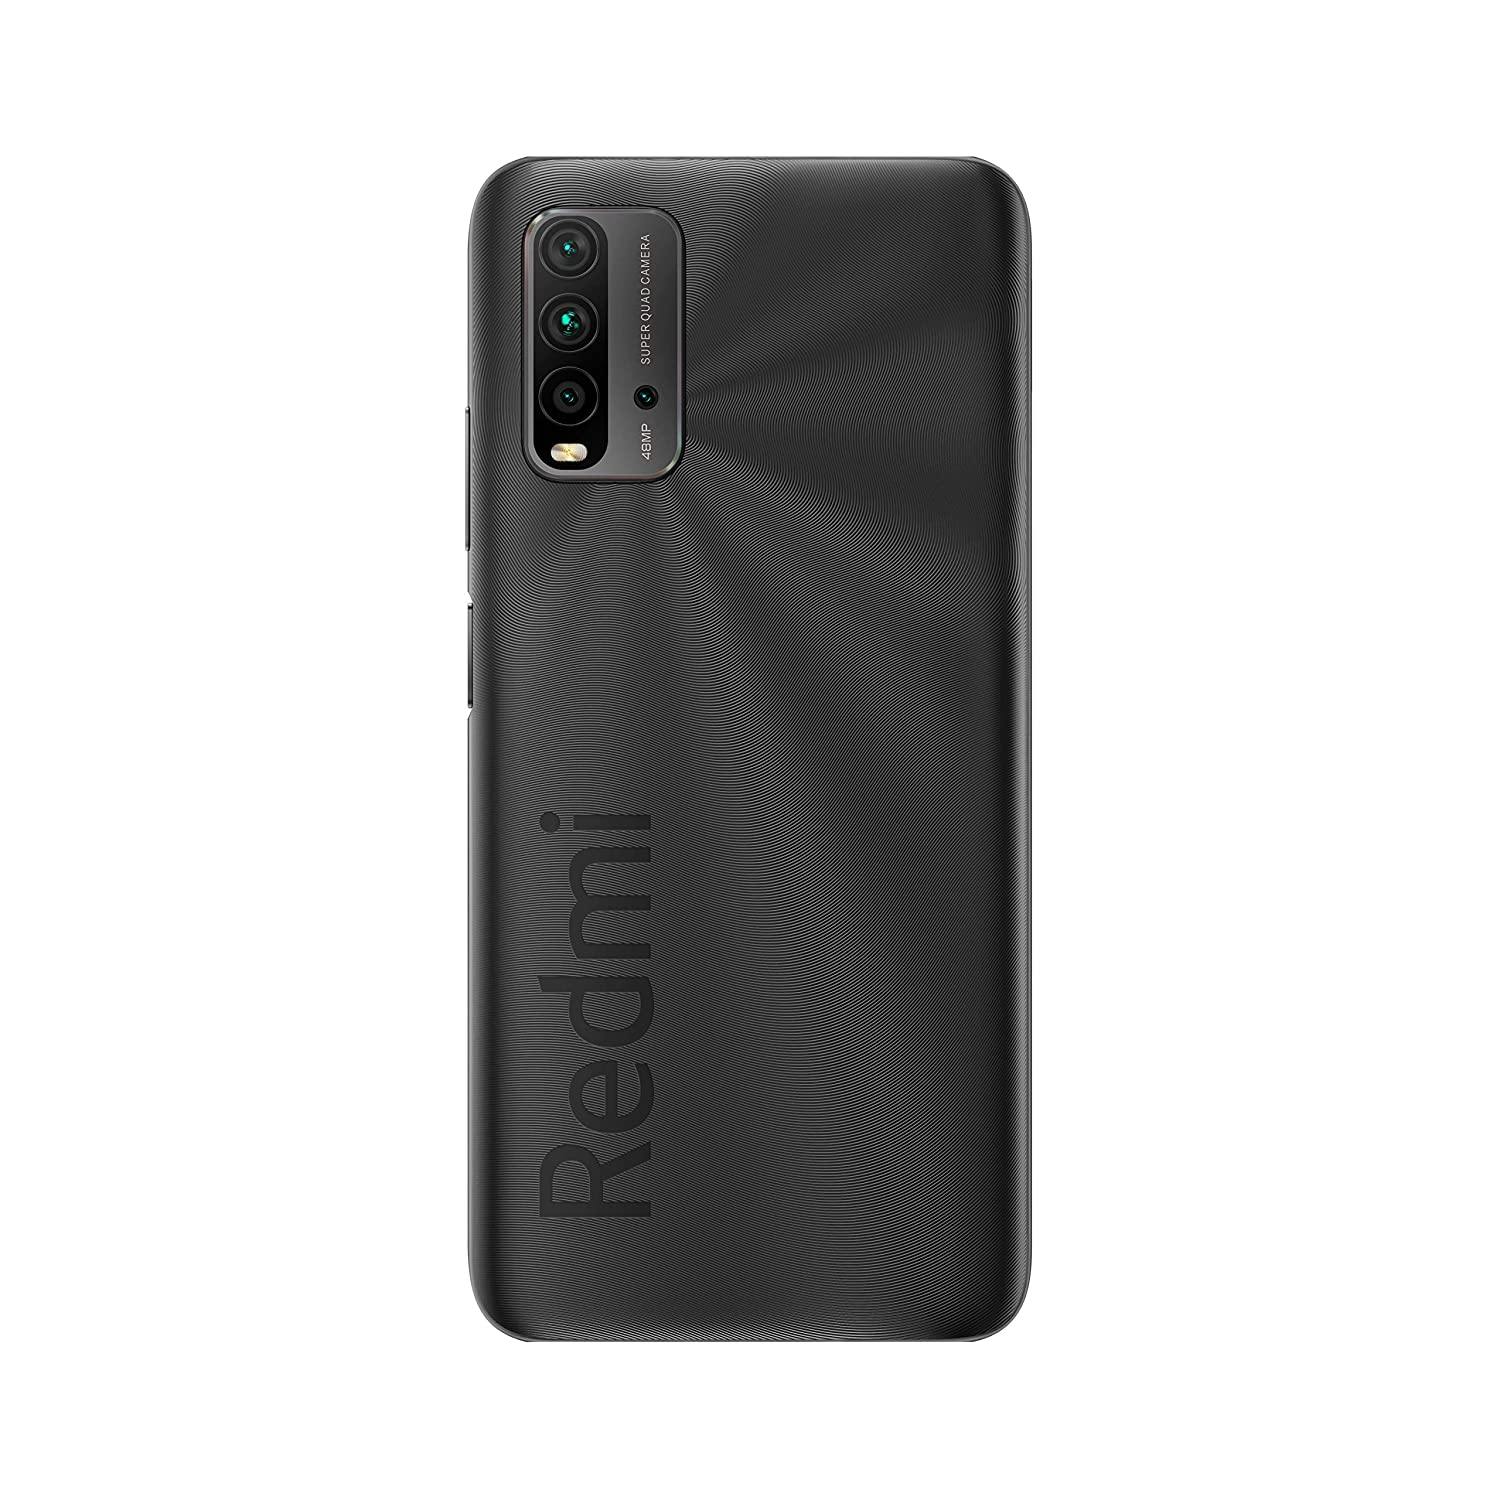 Redmi 9 Power (4GB RAM-64GB Storage) - 6000mAh Battery | 48MP Quad Camera-Mobile Phones-dealsplant